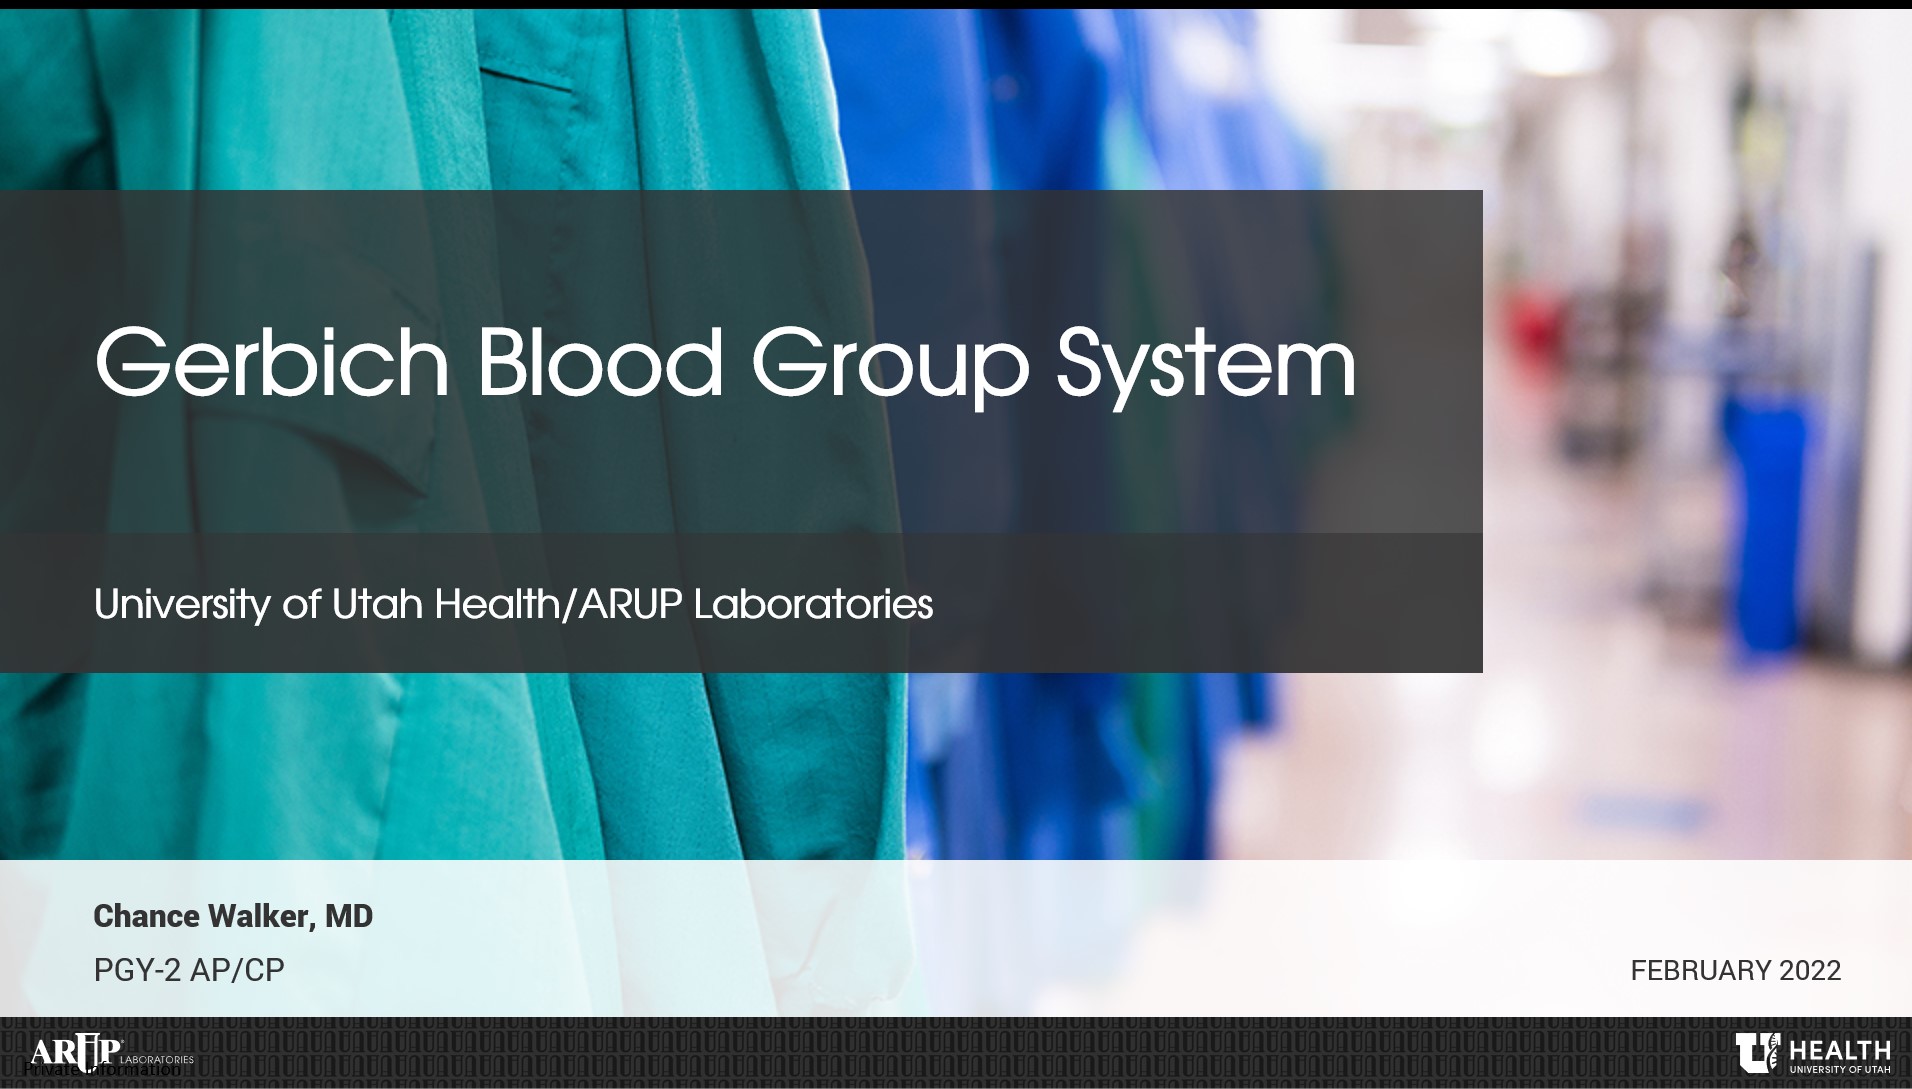 Gerbich Blood Group System